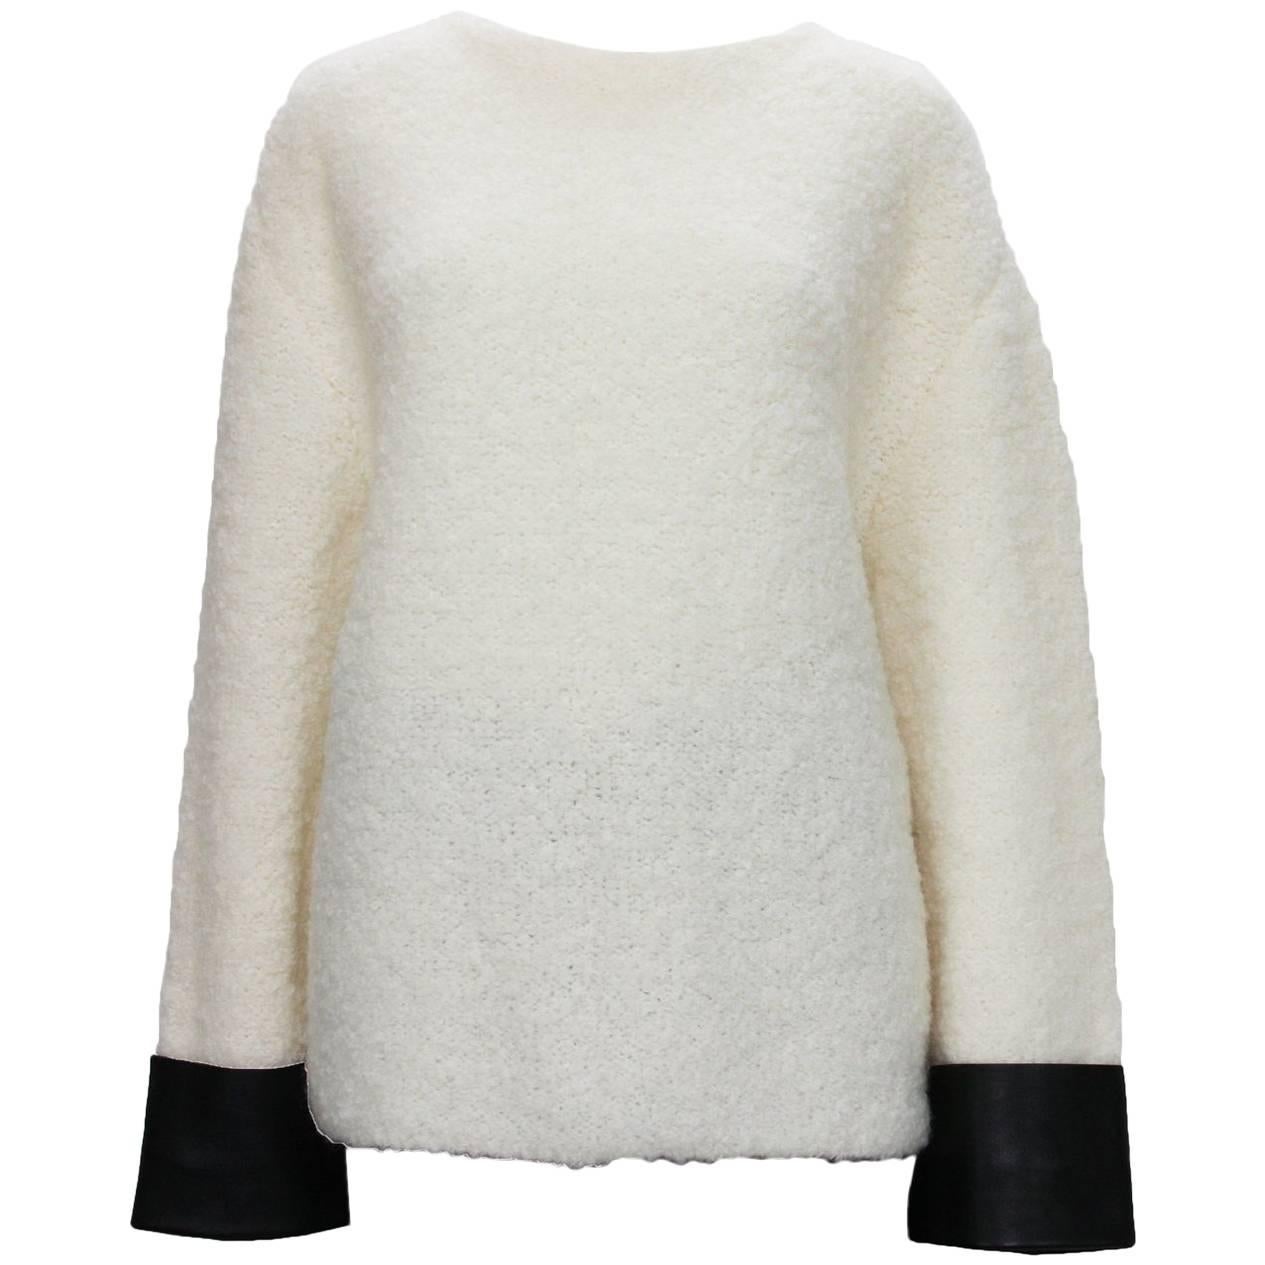 New $1630 GUCCI Boucle Wool Alpaca Cream Knitted Sweater w / Leather Cuffs M (L)